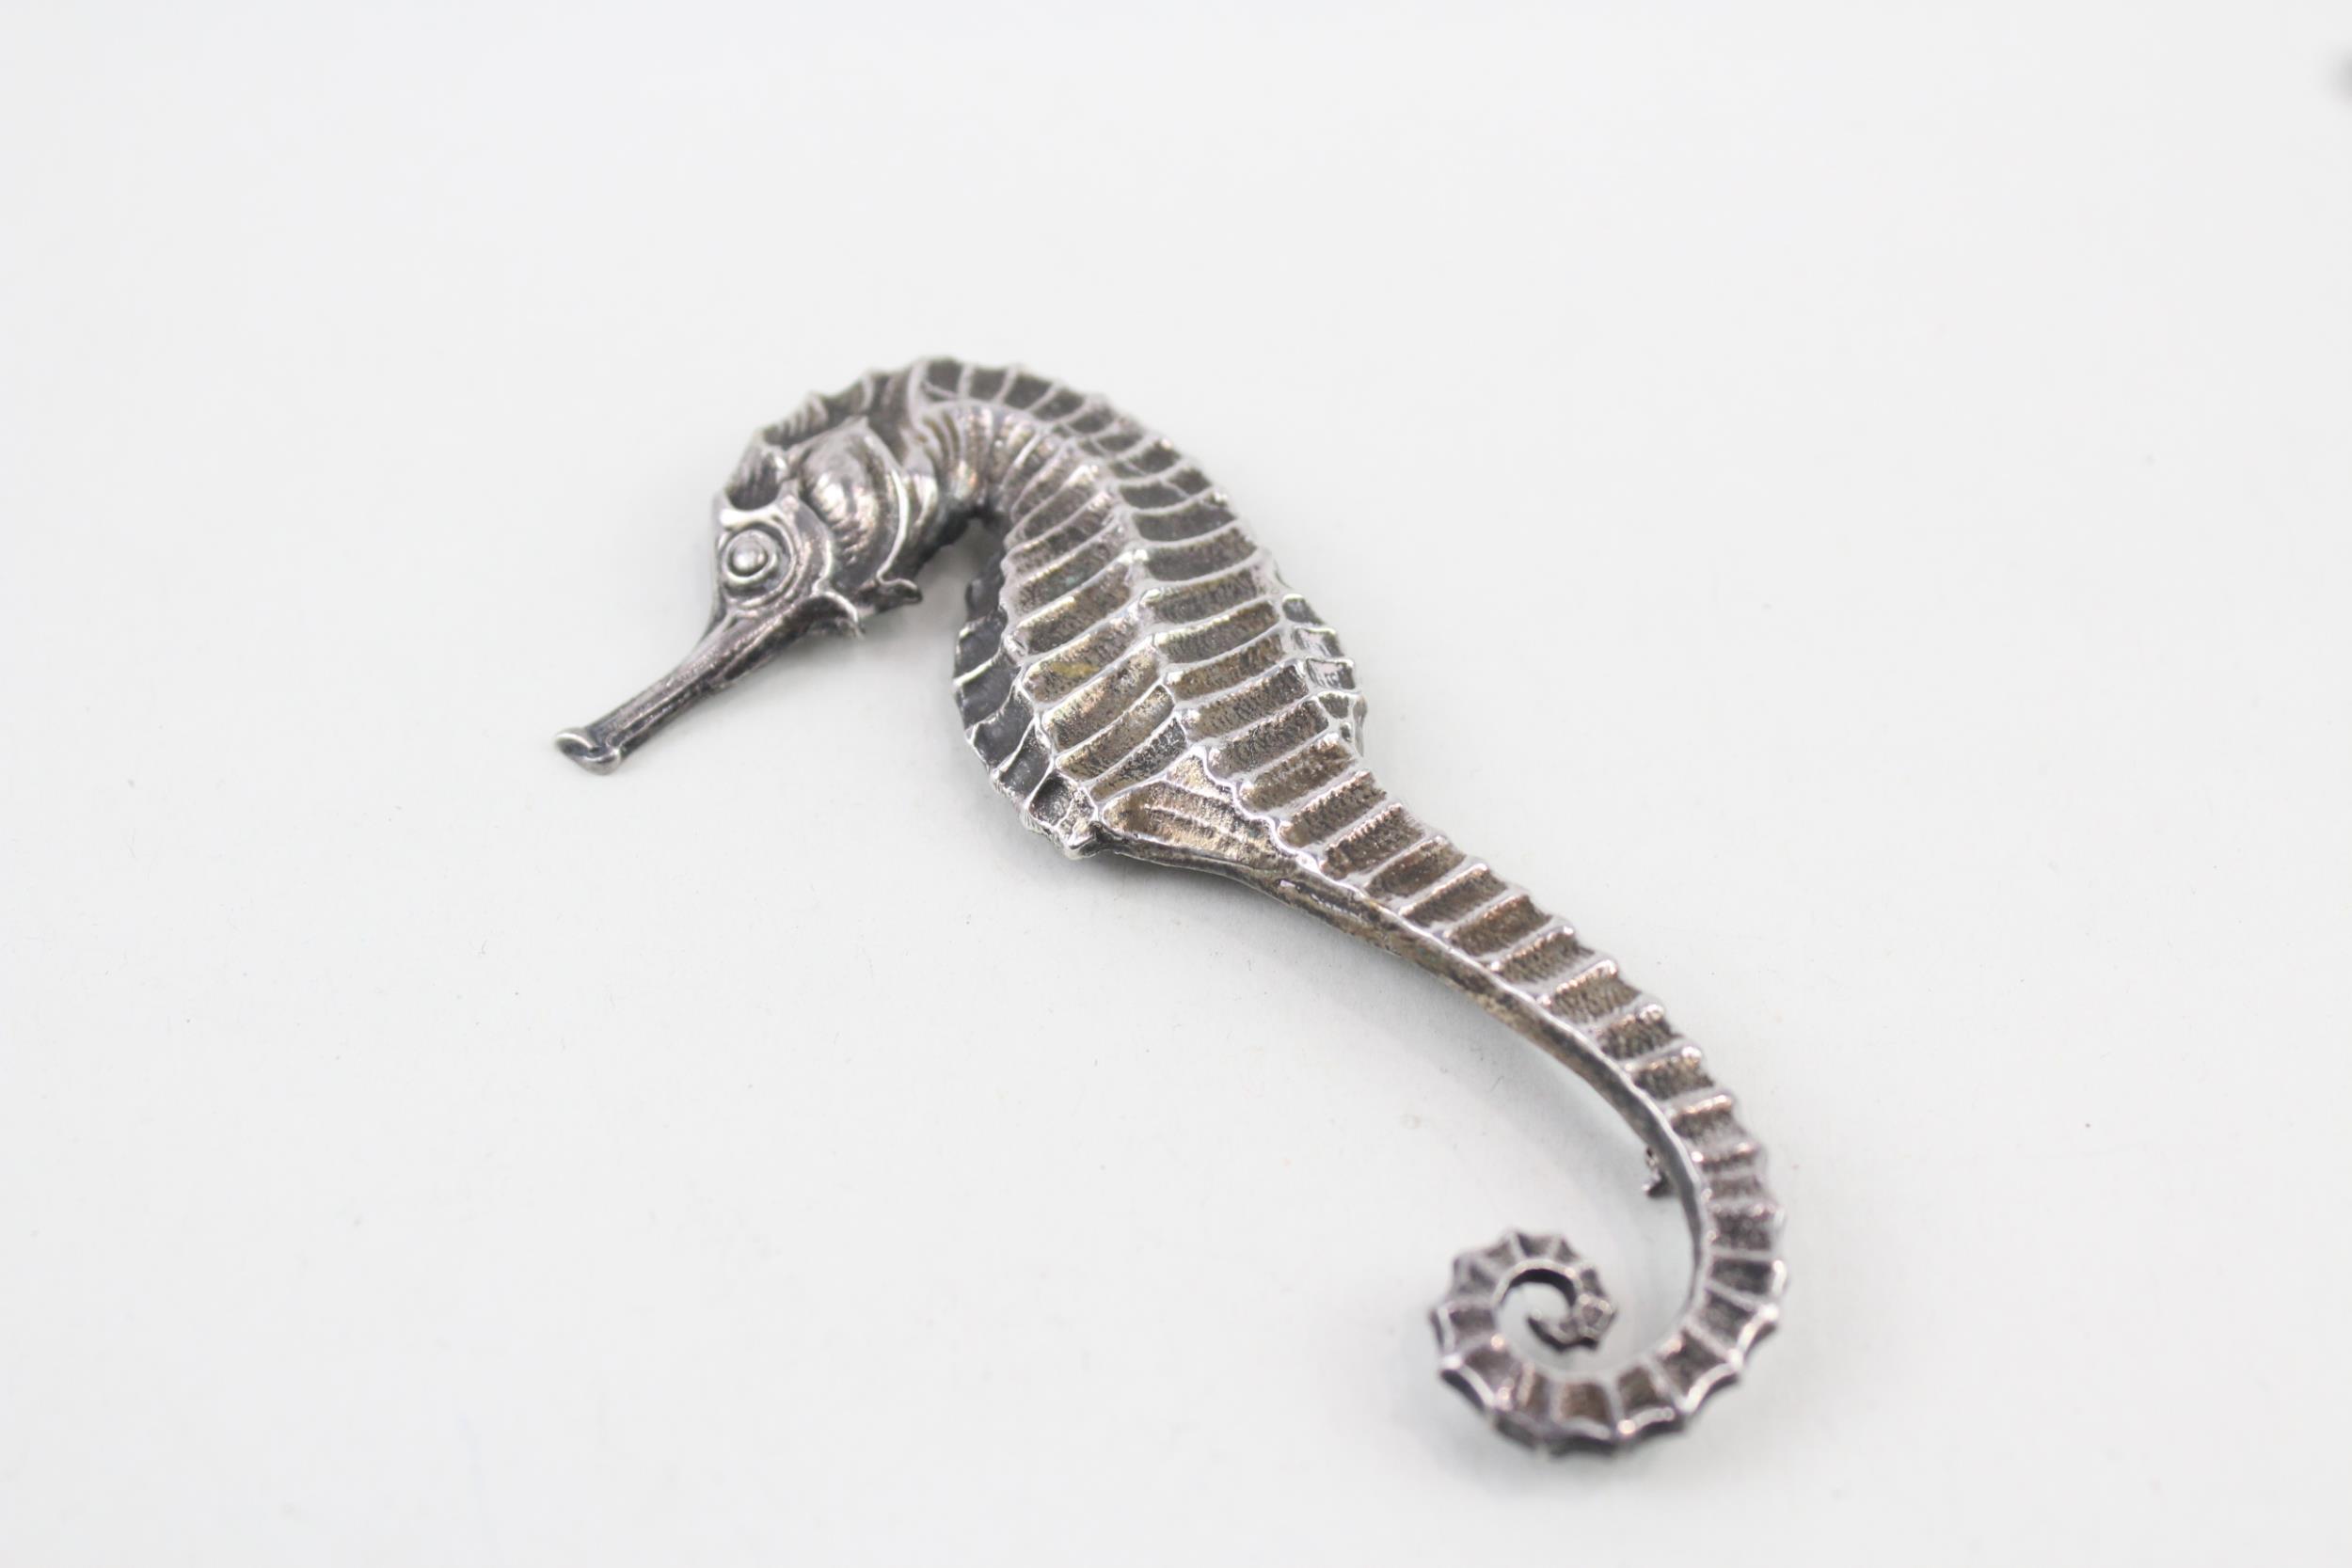 Silver seahorse brooch stamped Black, Starr & Gorham by Cini (15g)